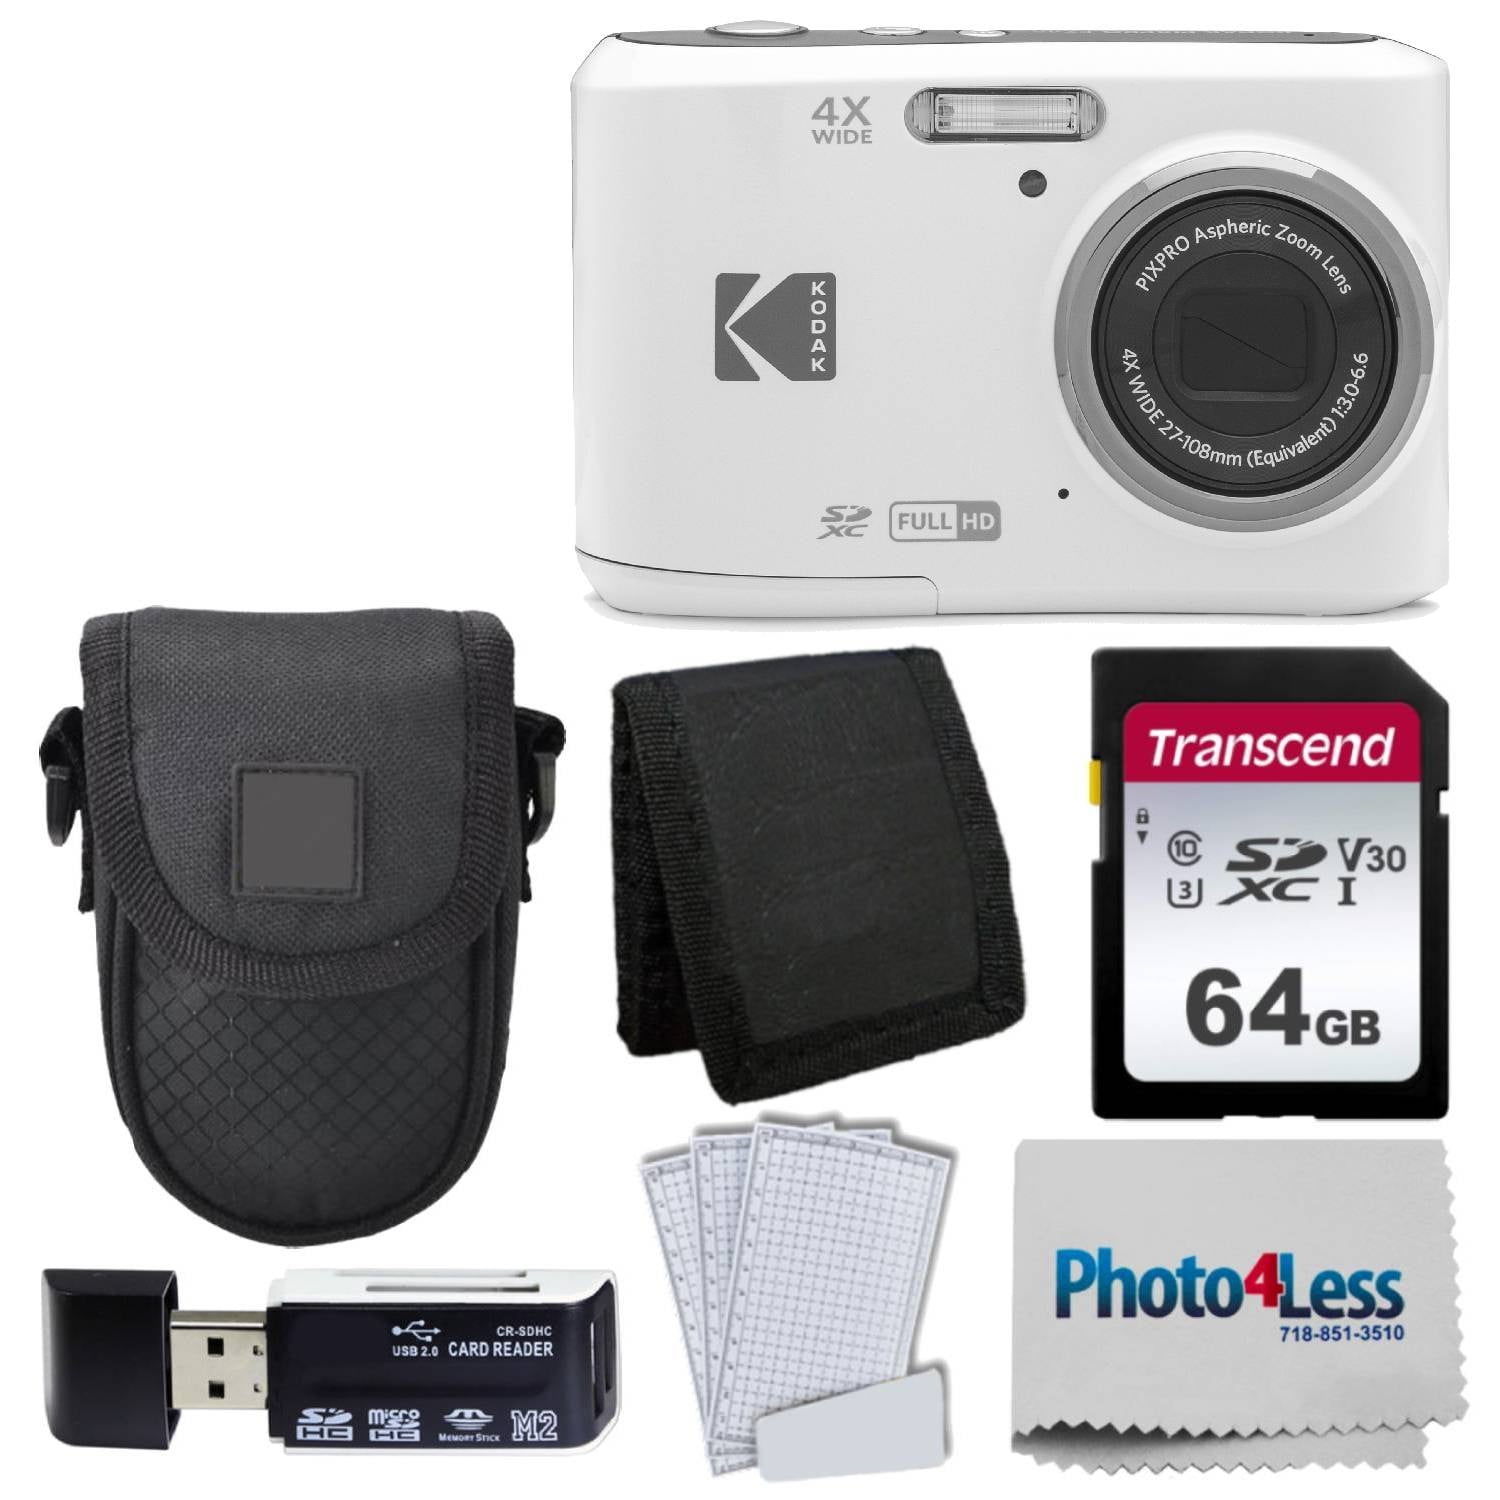 Kodak PIXPRO FZ45 Digital Camera White with 32GB SD Card and 4 AA Batteries